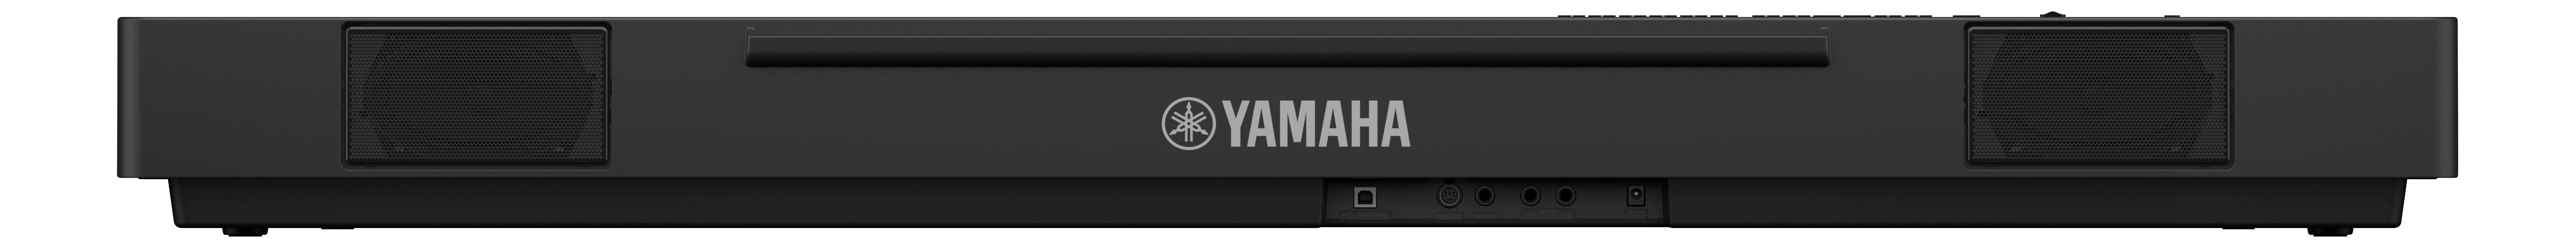 Yamaha P-225 Black - Portable digital piano - Variation 4